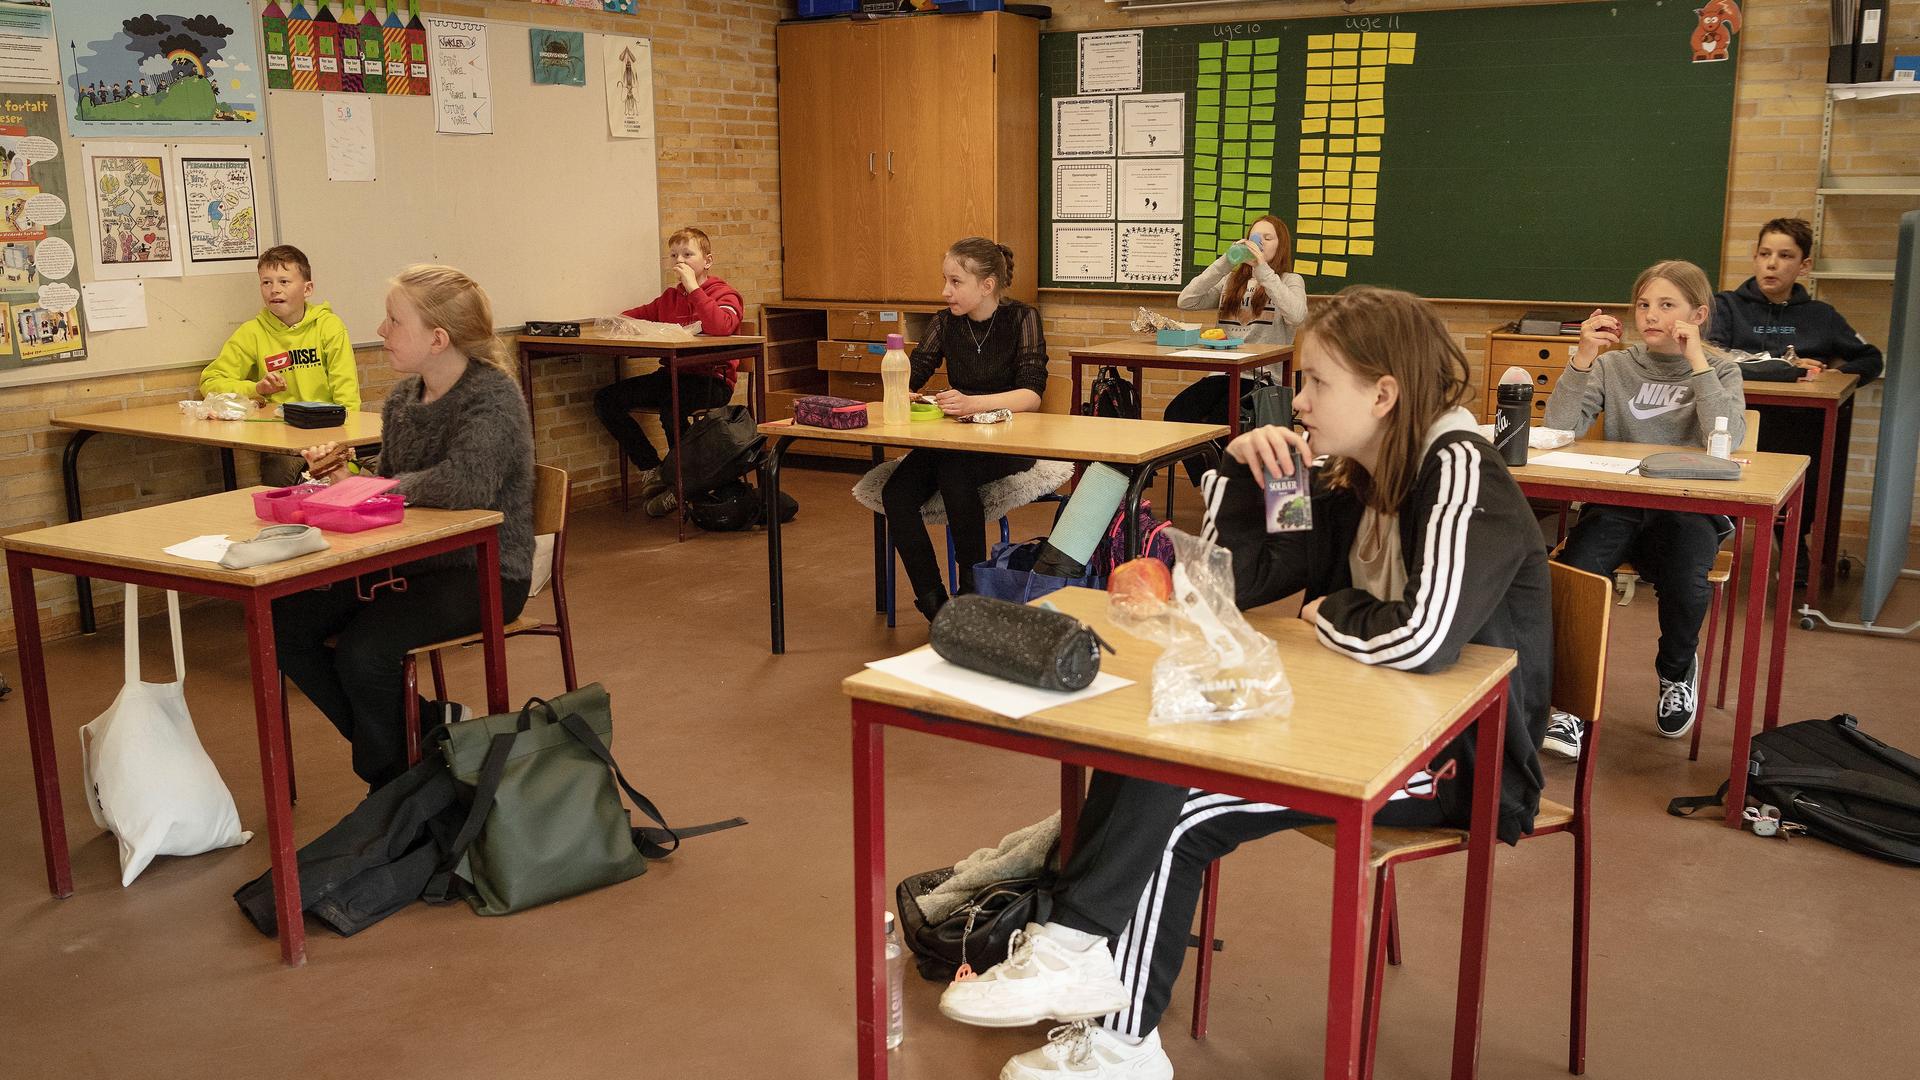 Pupils are seen during lunch break at the Korshoejskolen school, after it reopened following the lockdown due to the coronavirus disease (COVID-19) spread, in Randers, Denmark, April 15, 2020. 